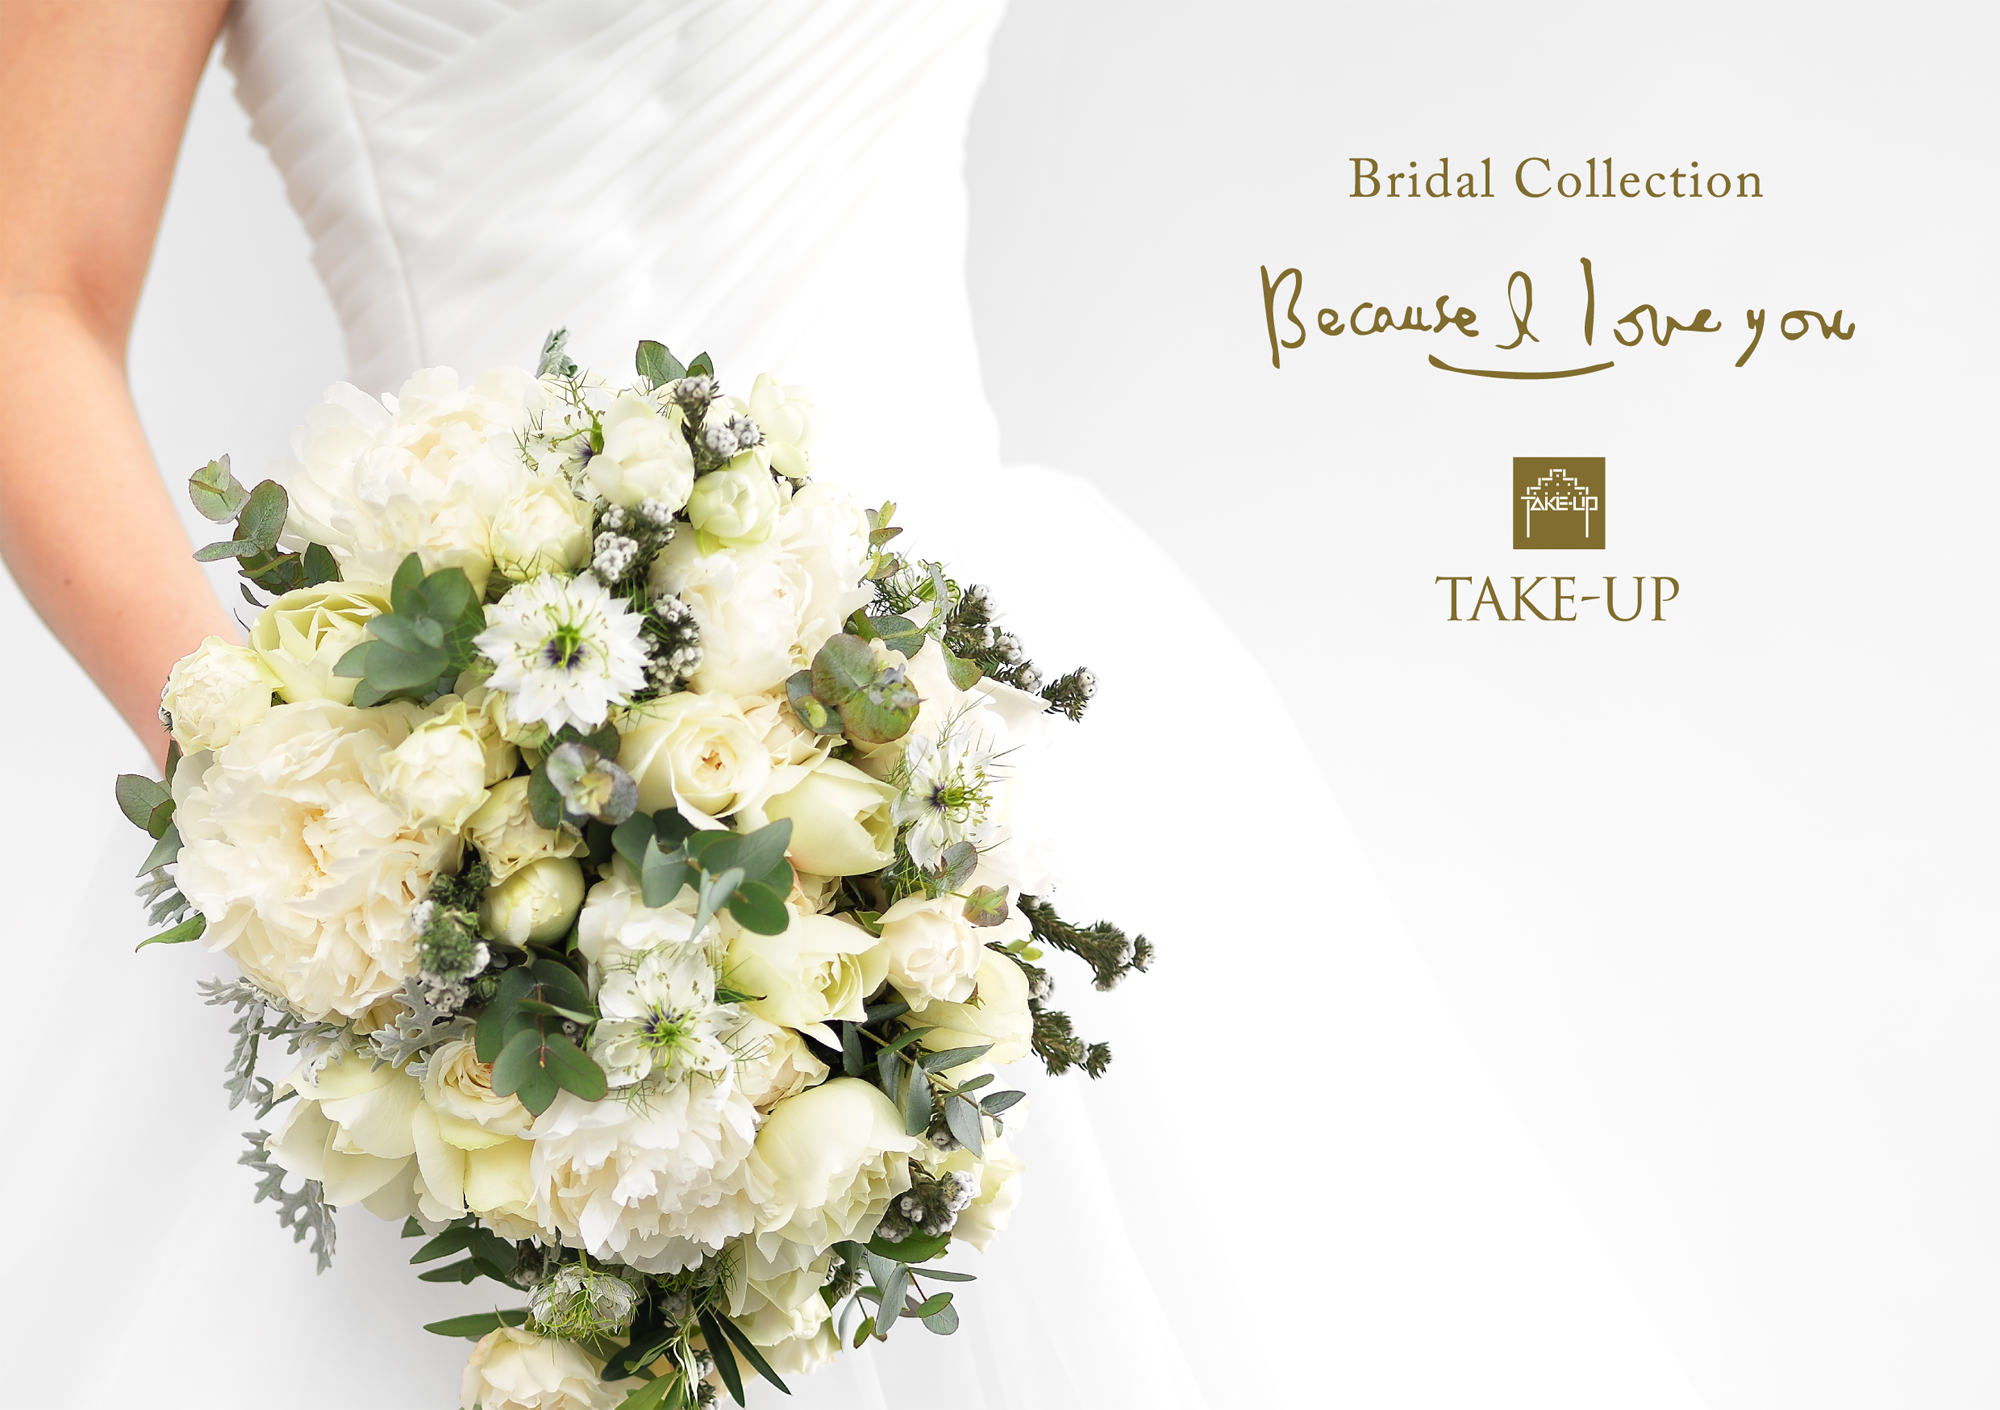 Bridal Collection catalog